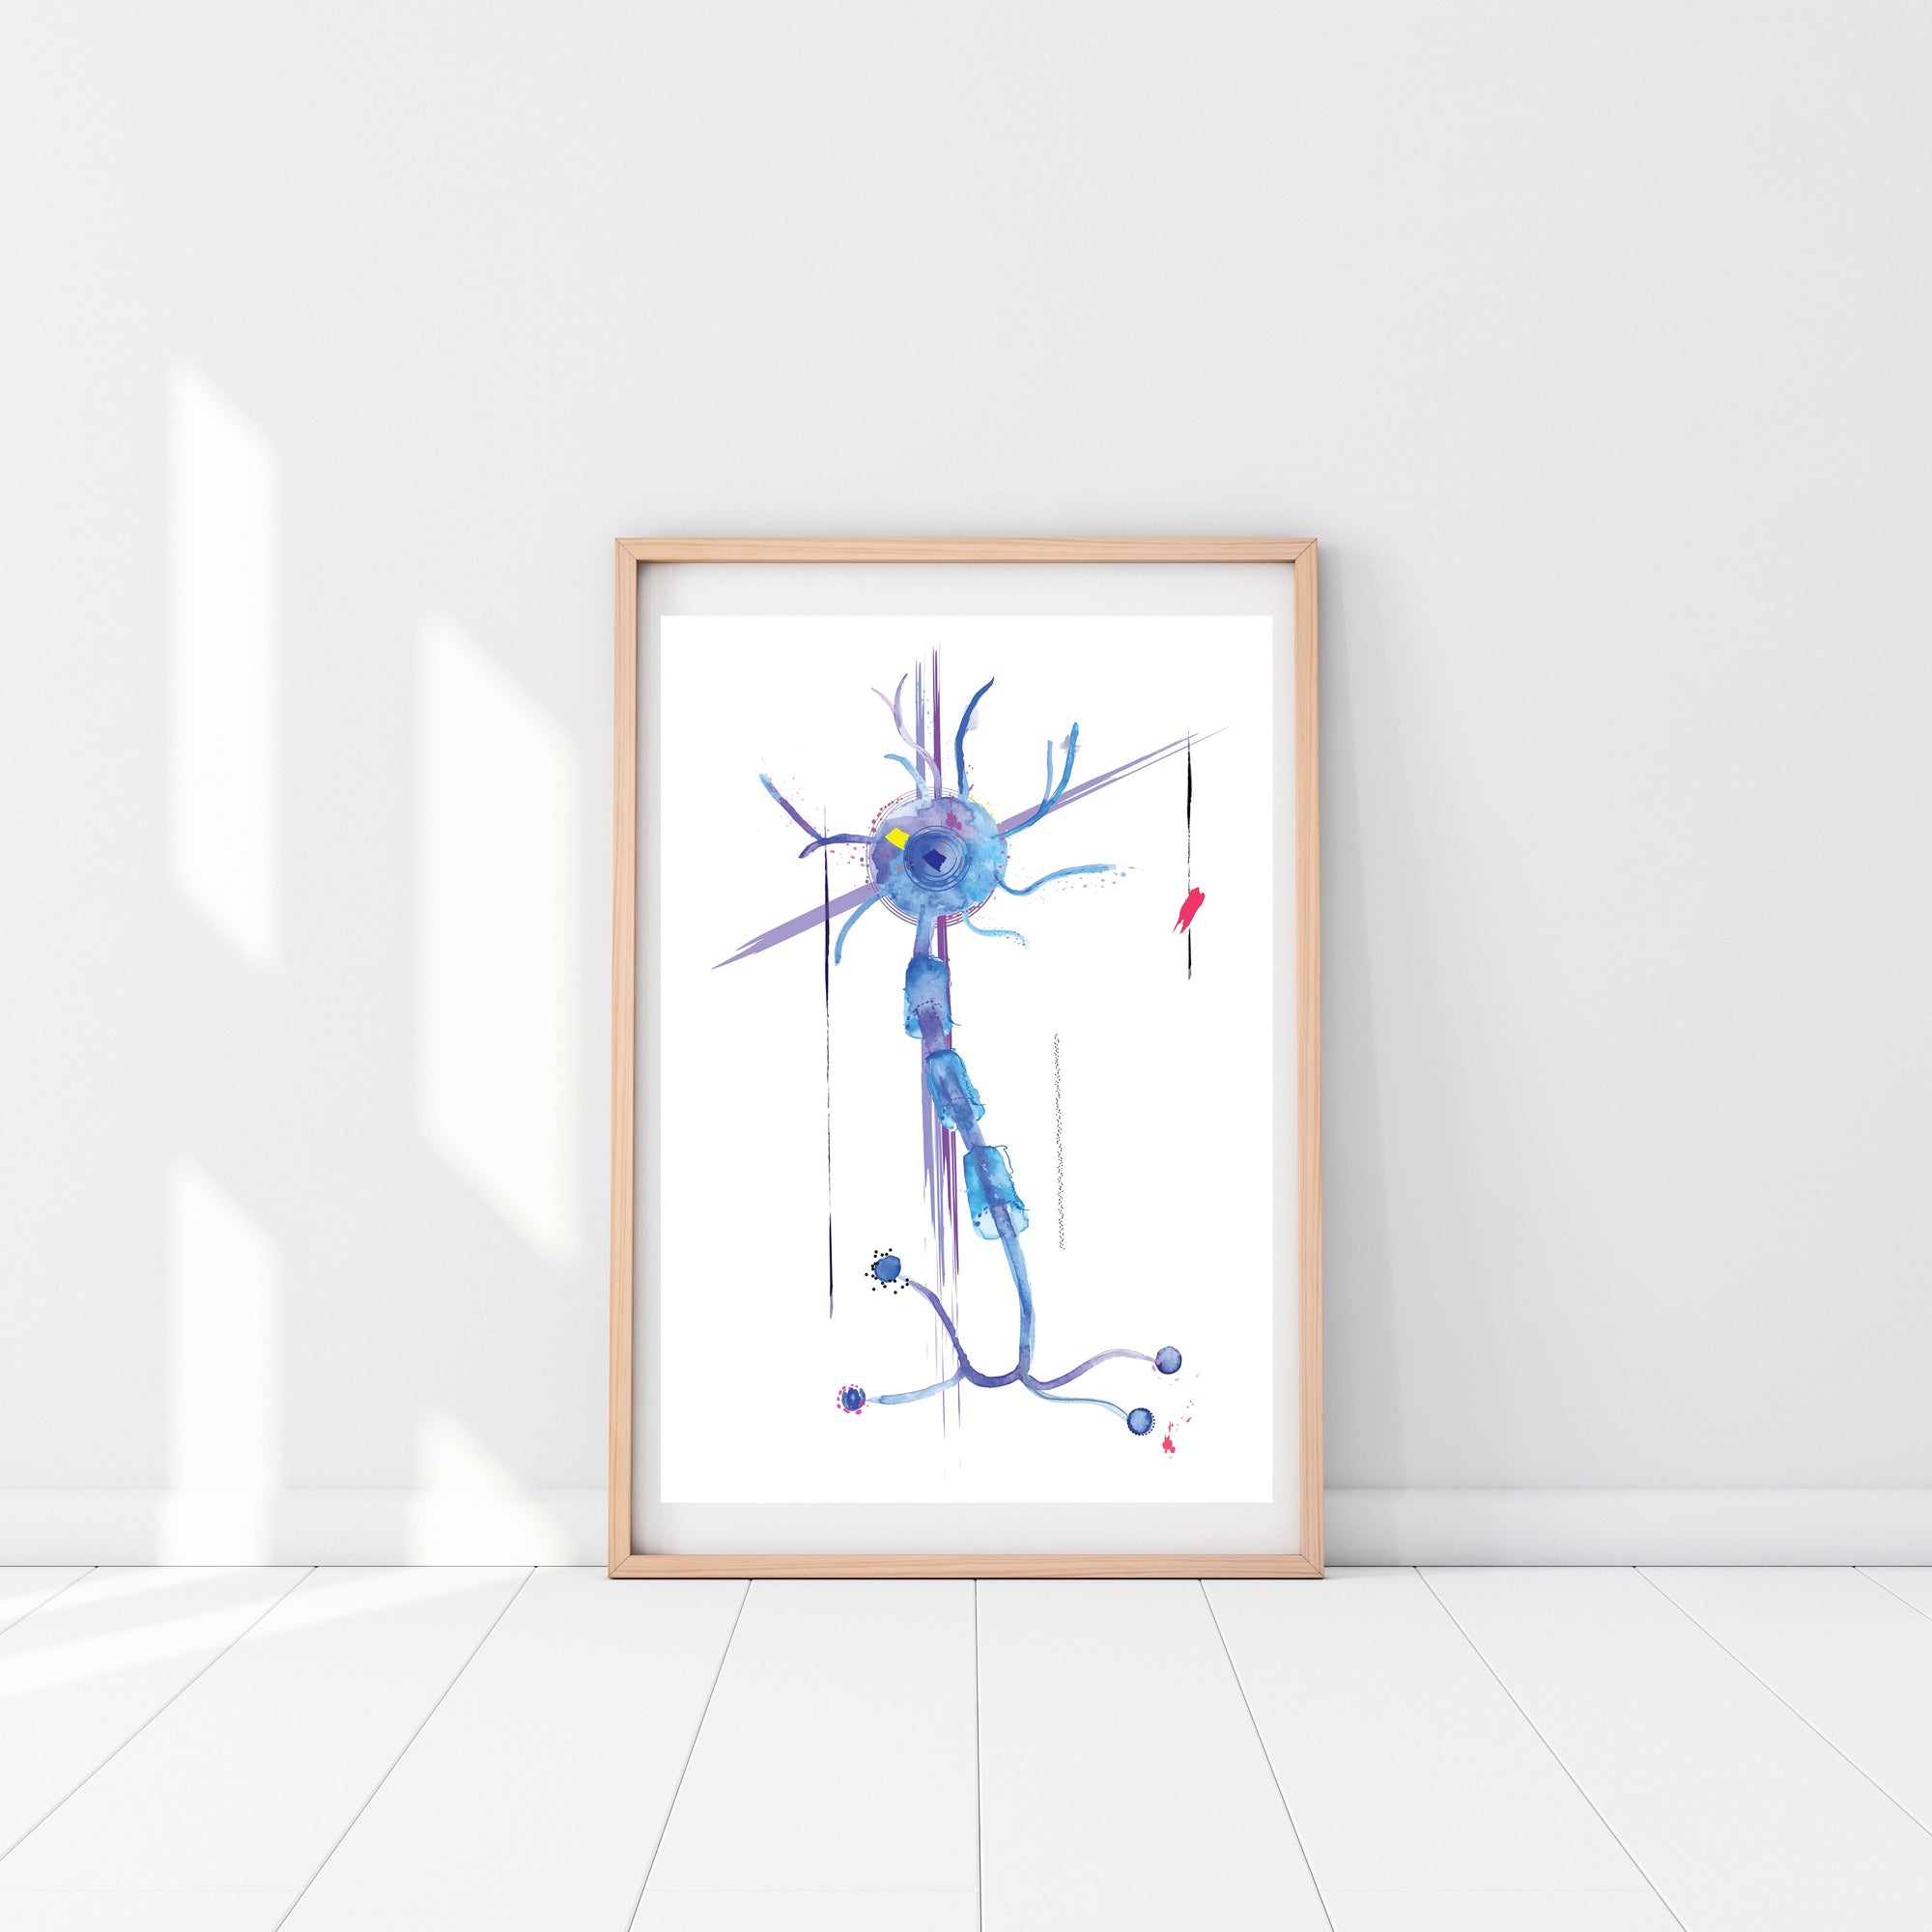 neuron anatomy art